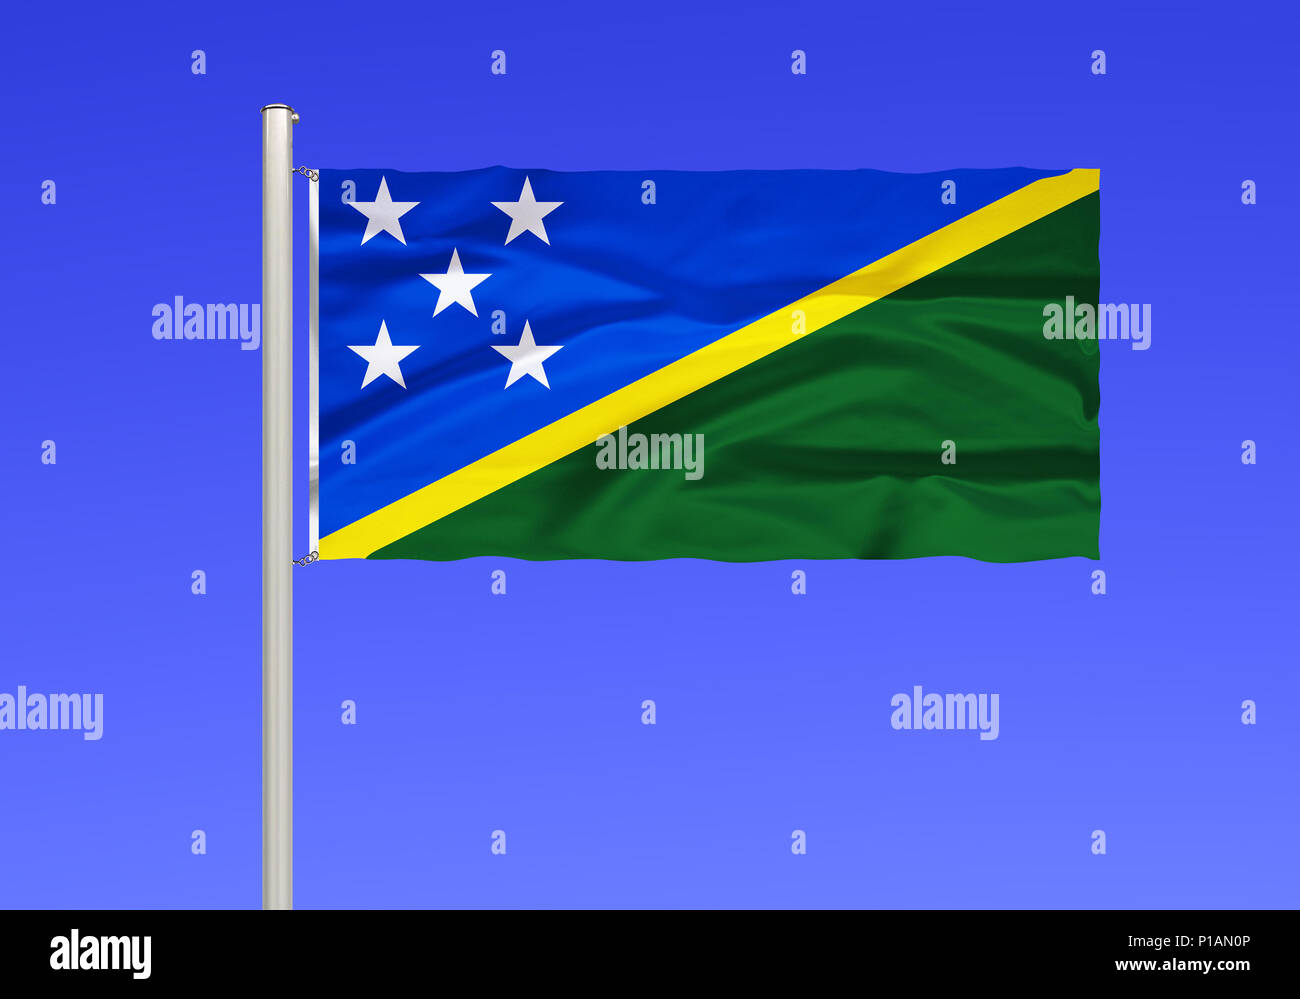 Flag of the Solomon Islands, his coworker,his coworker, melanesia,  melanesia, , Flagge von den Salomonen, Suedsee, melanesien,Suedsee,  Melanesien Stock Photo - Alamy